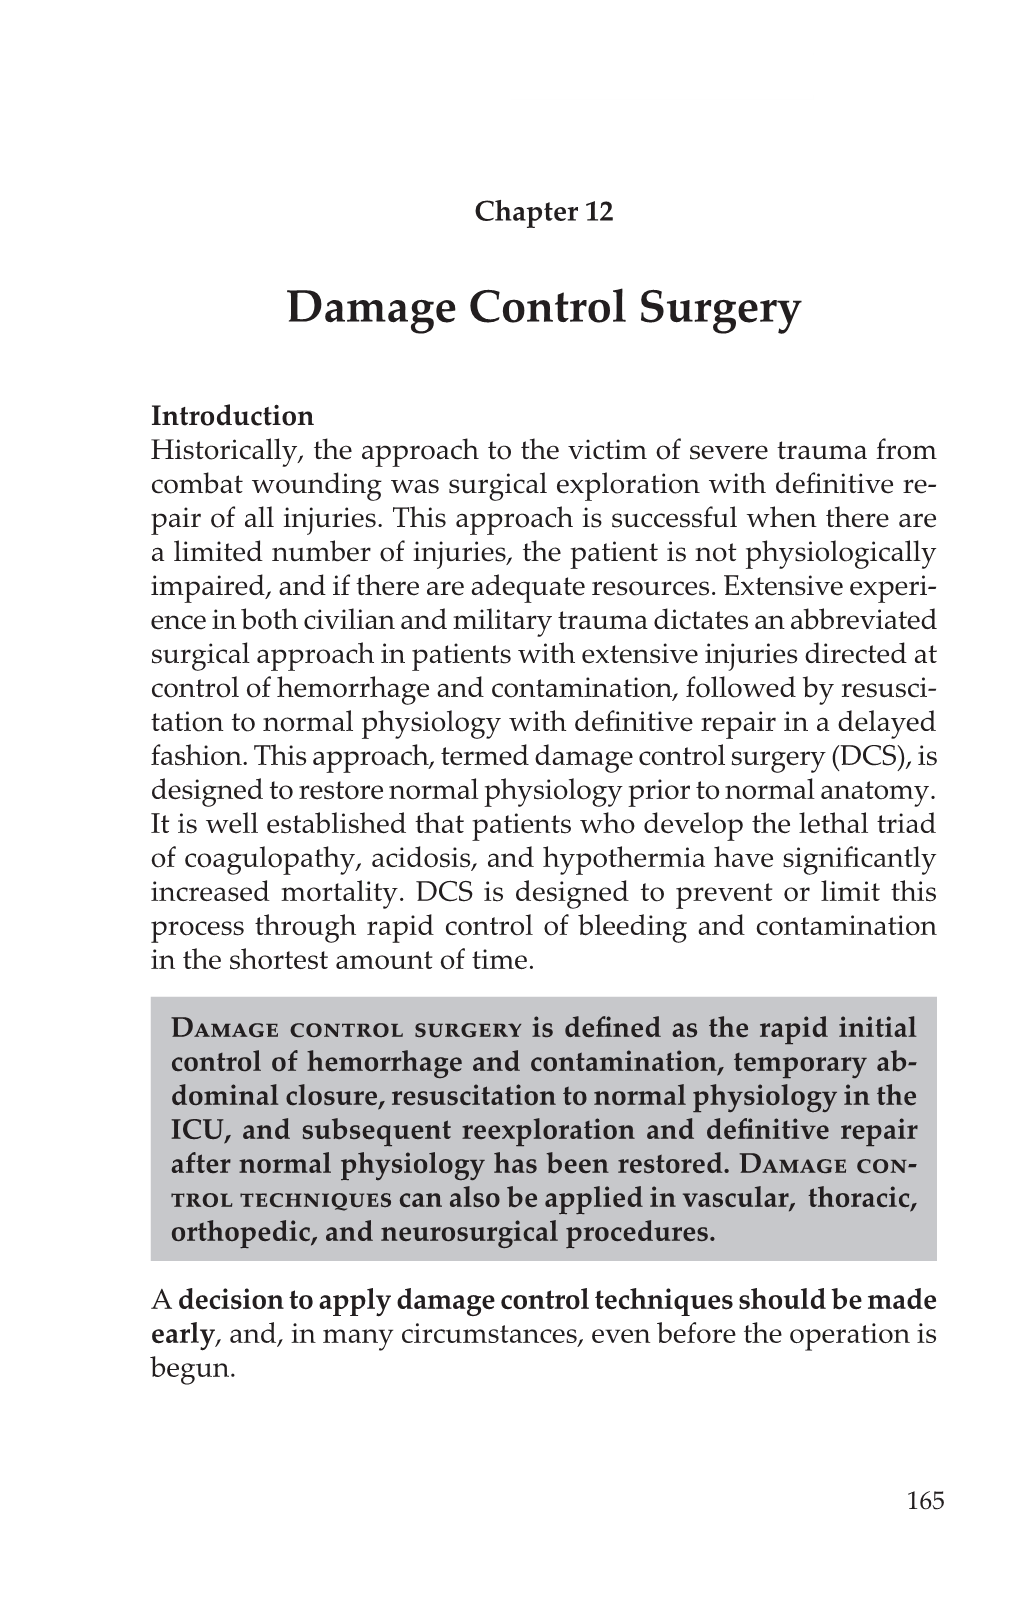 Damage Control Surgery